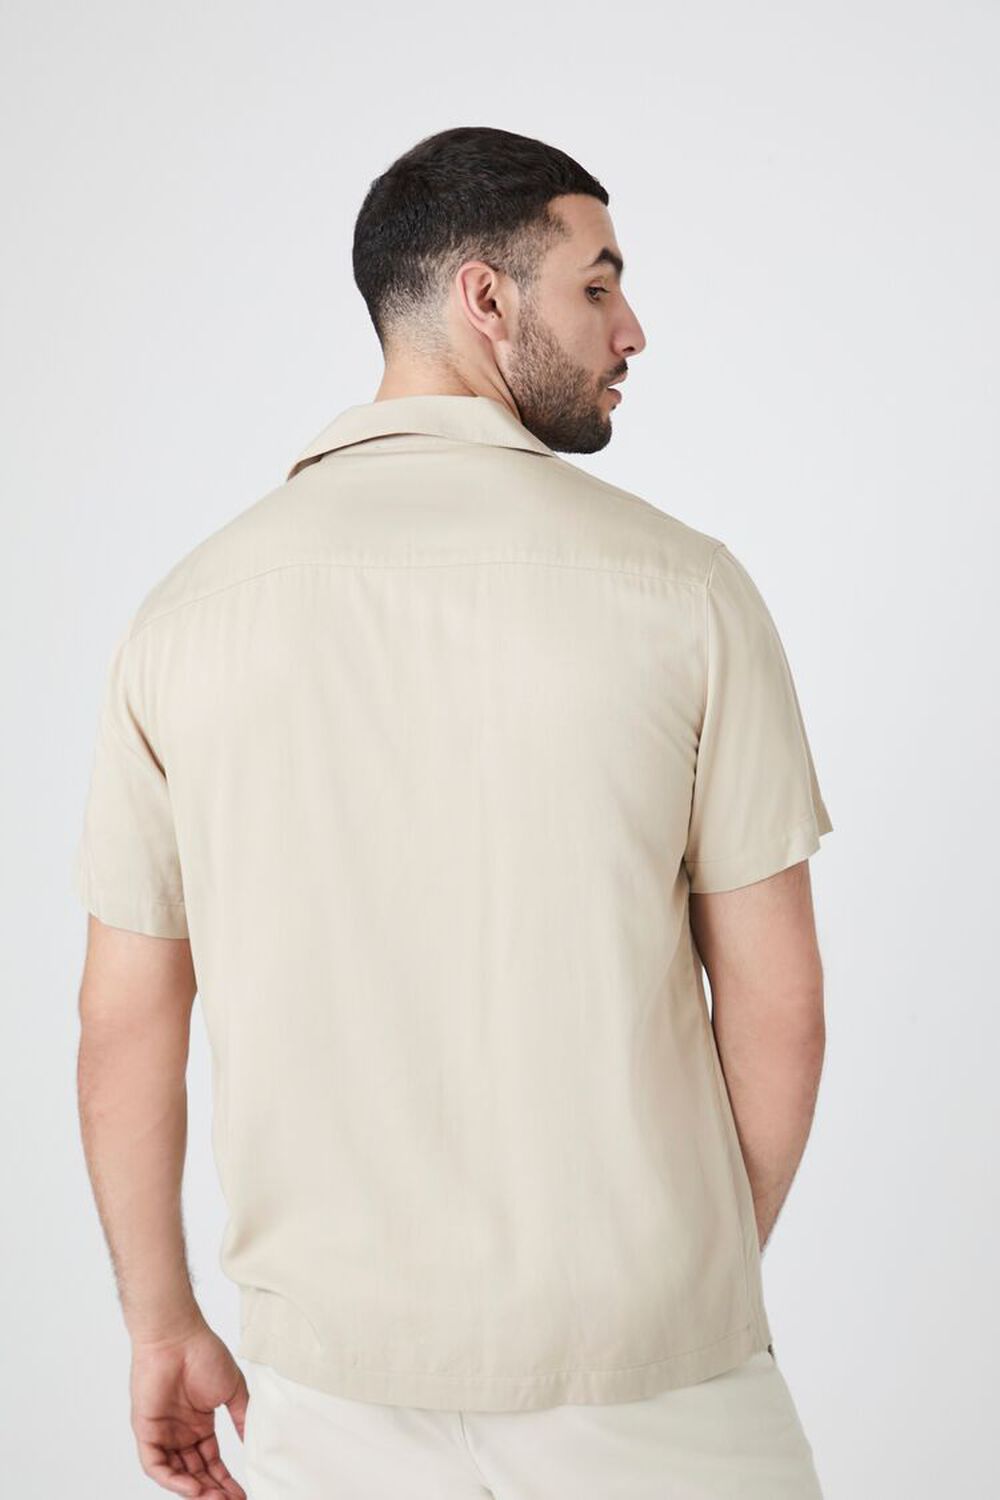 Solid Rayon Short Sleeve Shirt